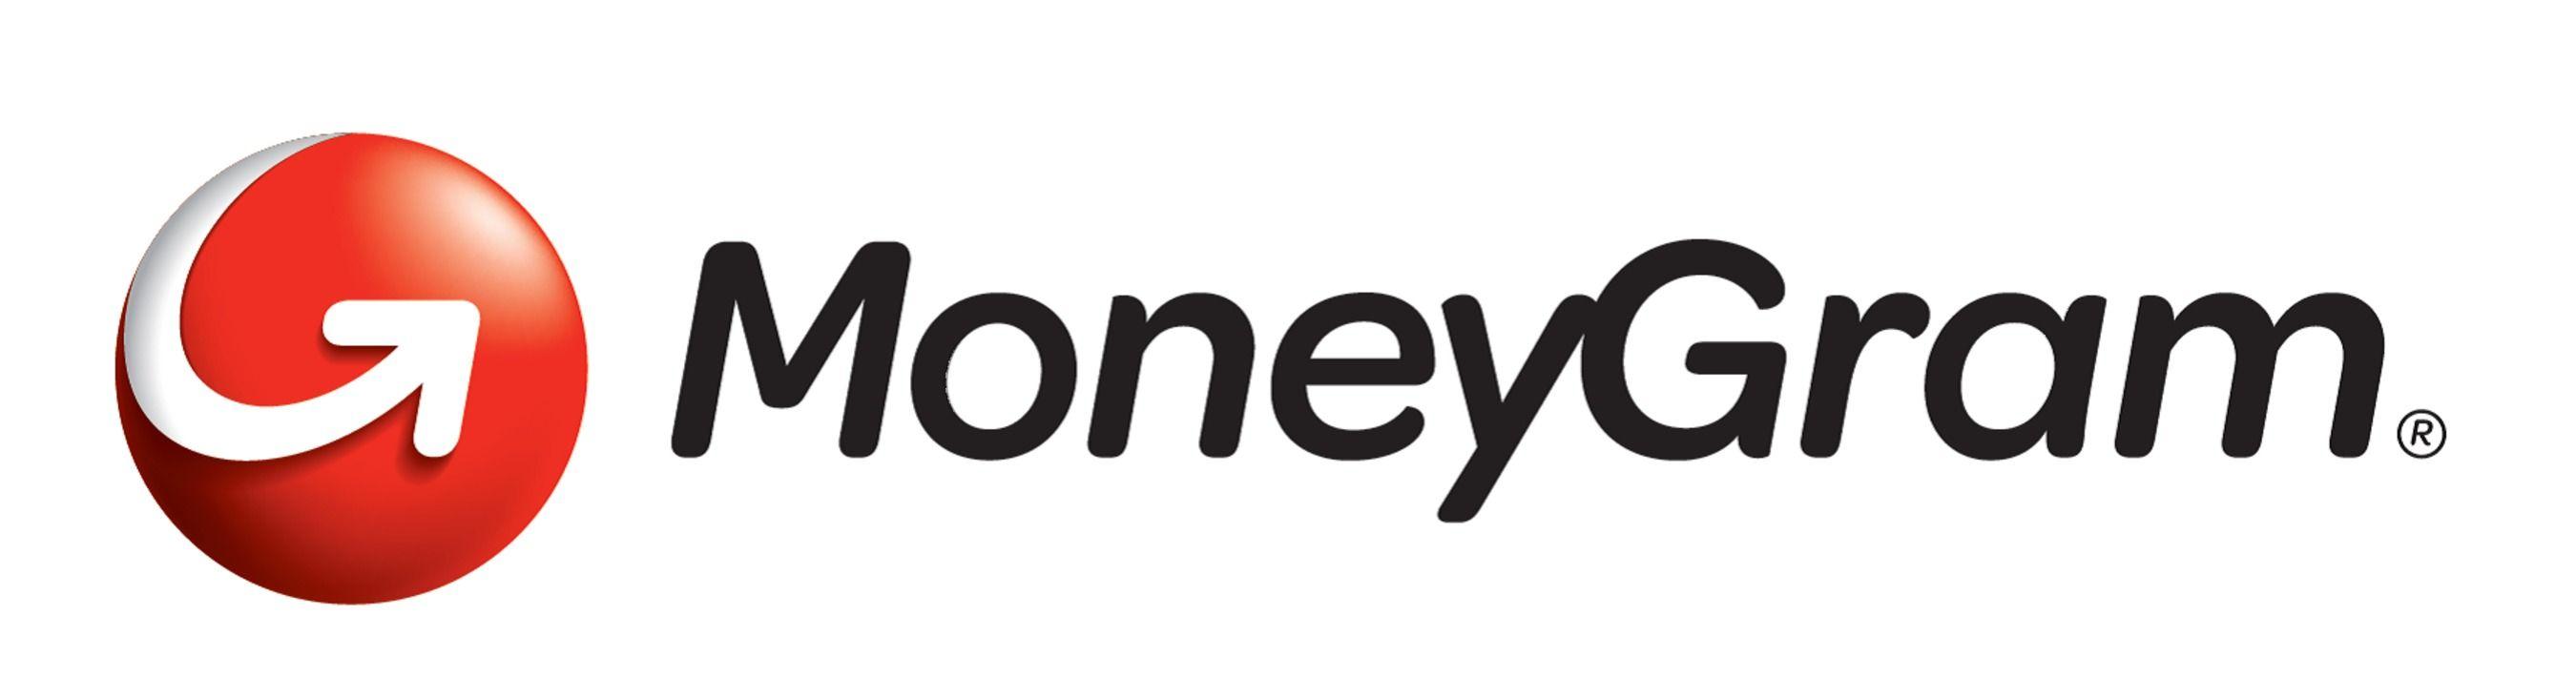 MoneyGram Logo - MoneyGram Launches new Online Money Transfer Service Platform